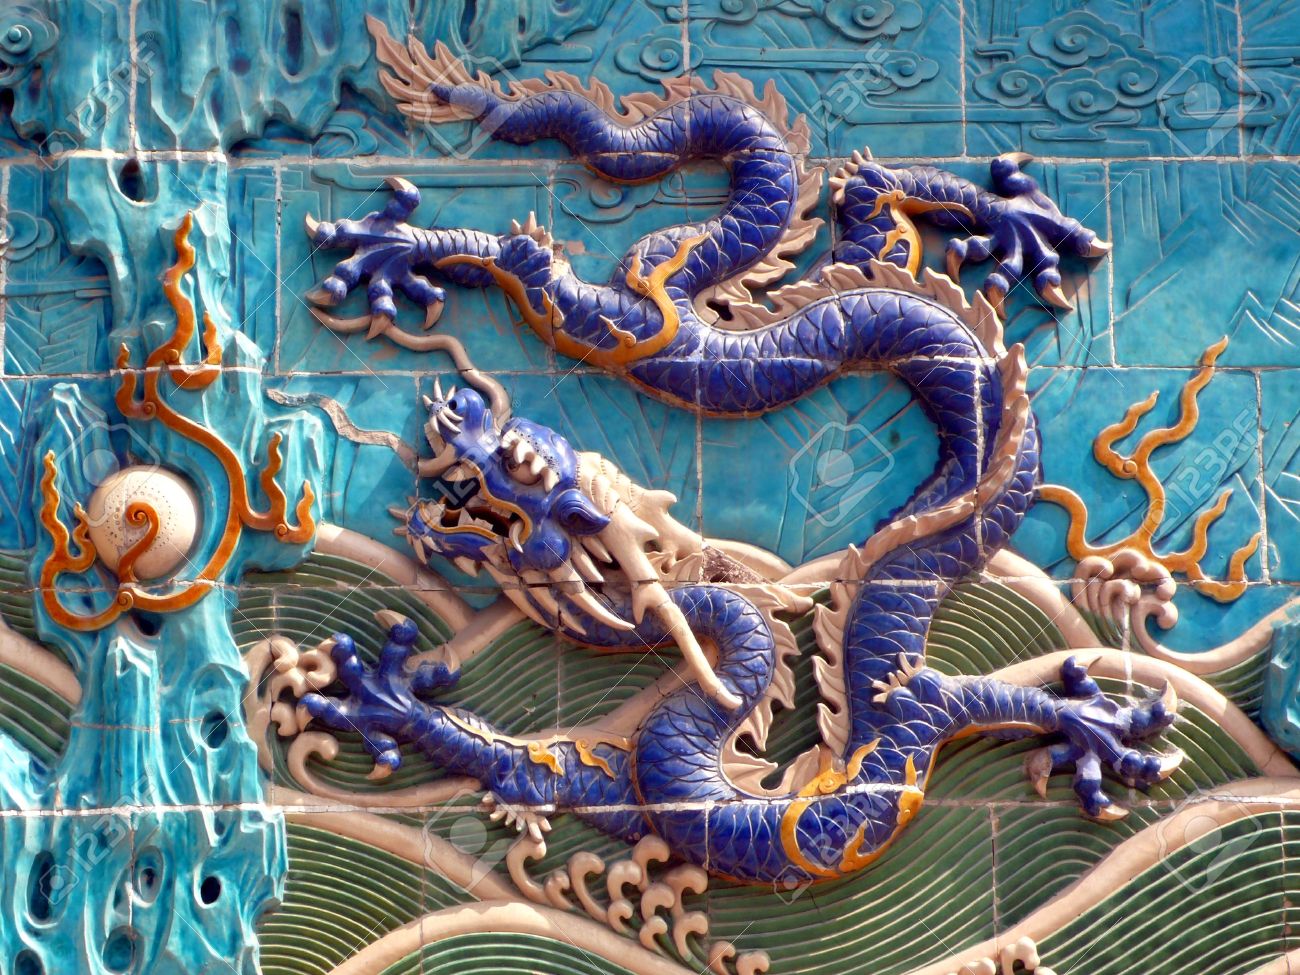 High Resolution Wallpaper | Nine-dragon Wall 1300x975 px